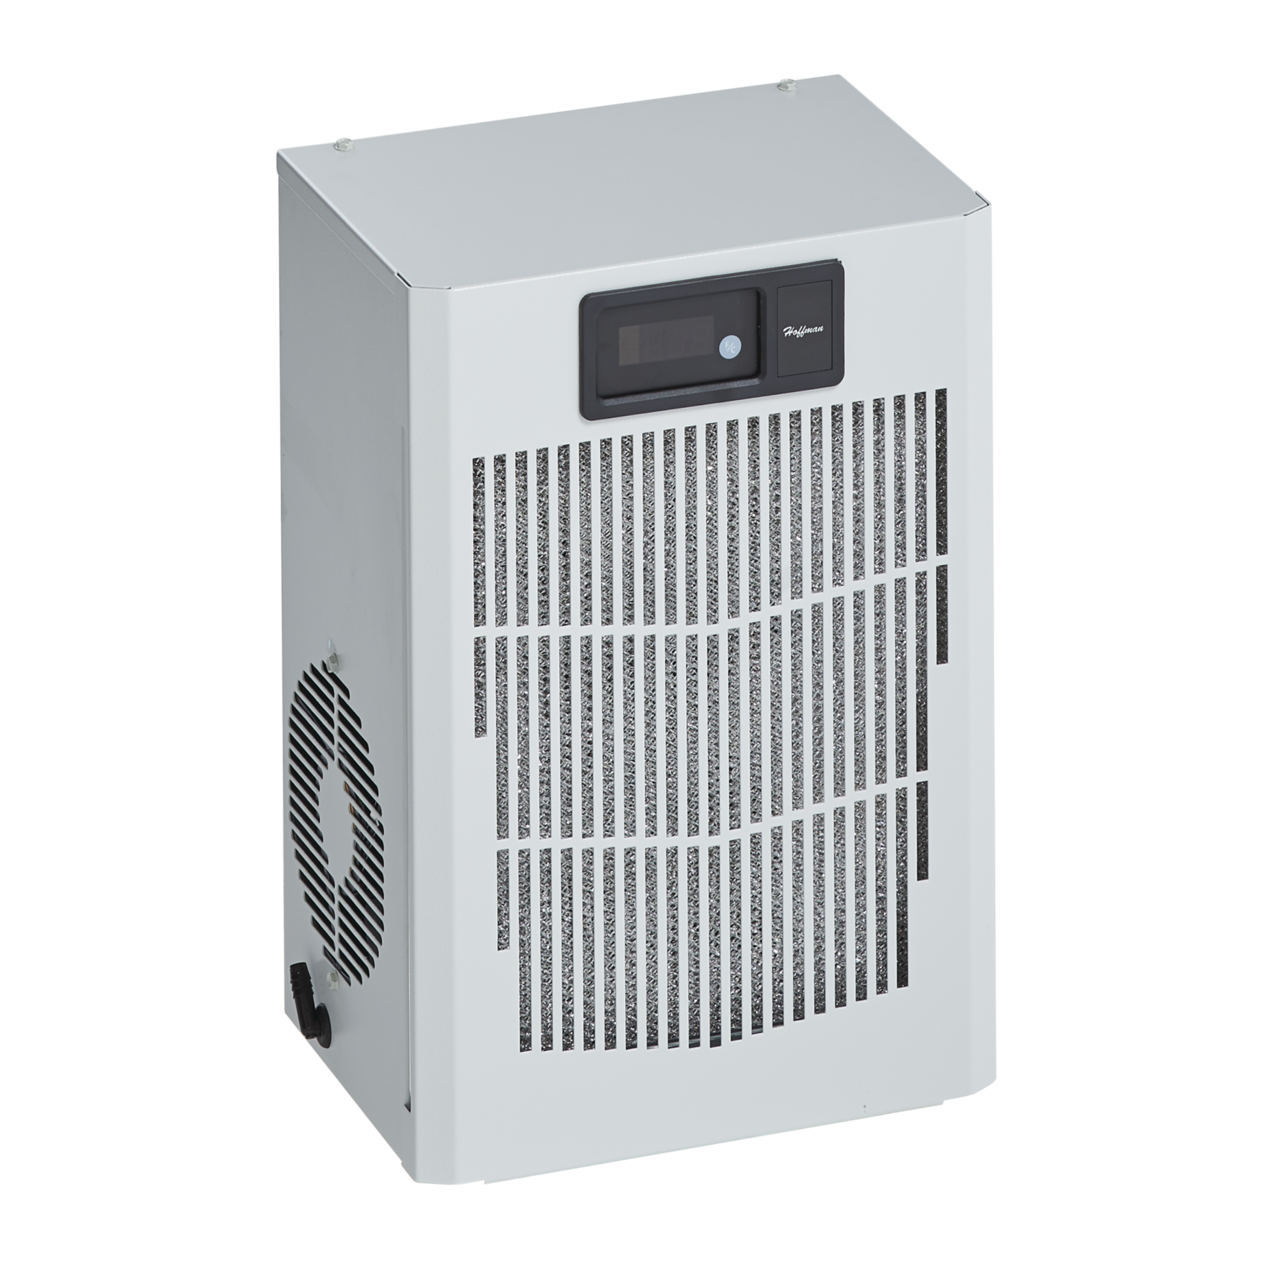 nVent HOFFMAN Spectracool™ N170216G020 MCL Indoor/Outdoor Enclosure Air Conditioner, 115 VAC, 7/7.1 A, 50/60 Hz, NEMA 3R/4/12 Enclosure, 1800 Btu/hr